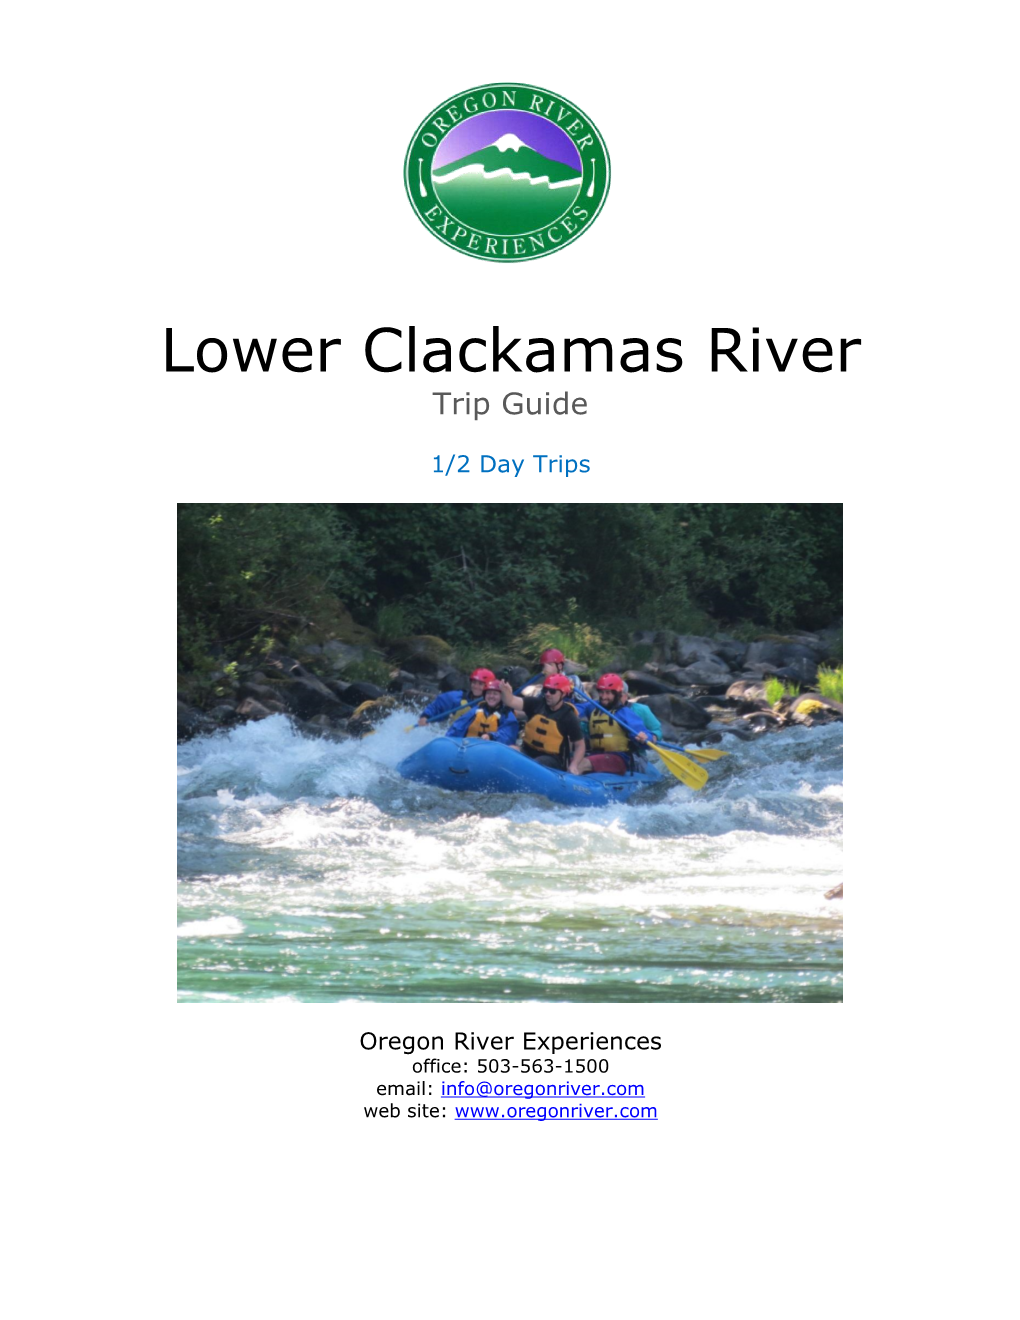 Lower Clackamas River Trips